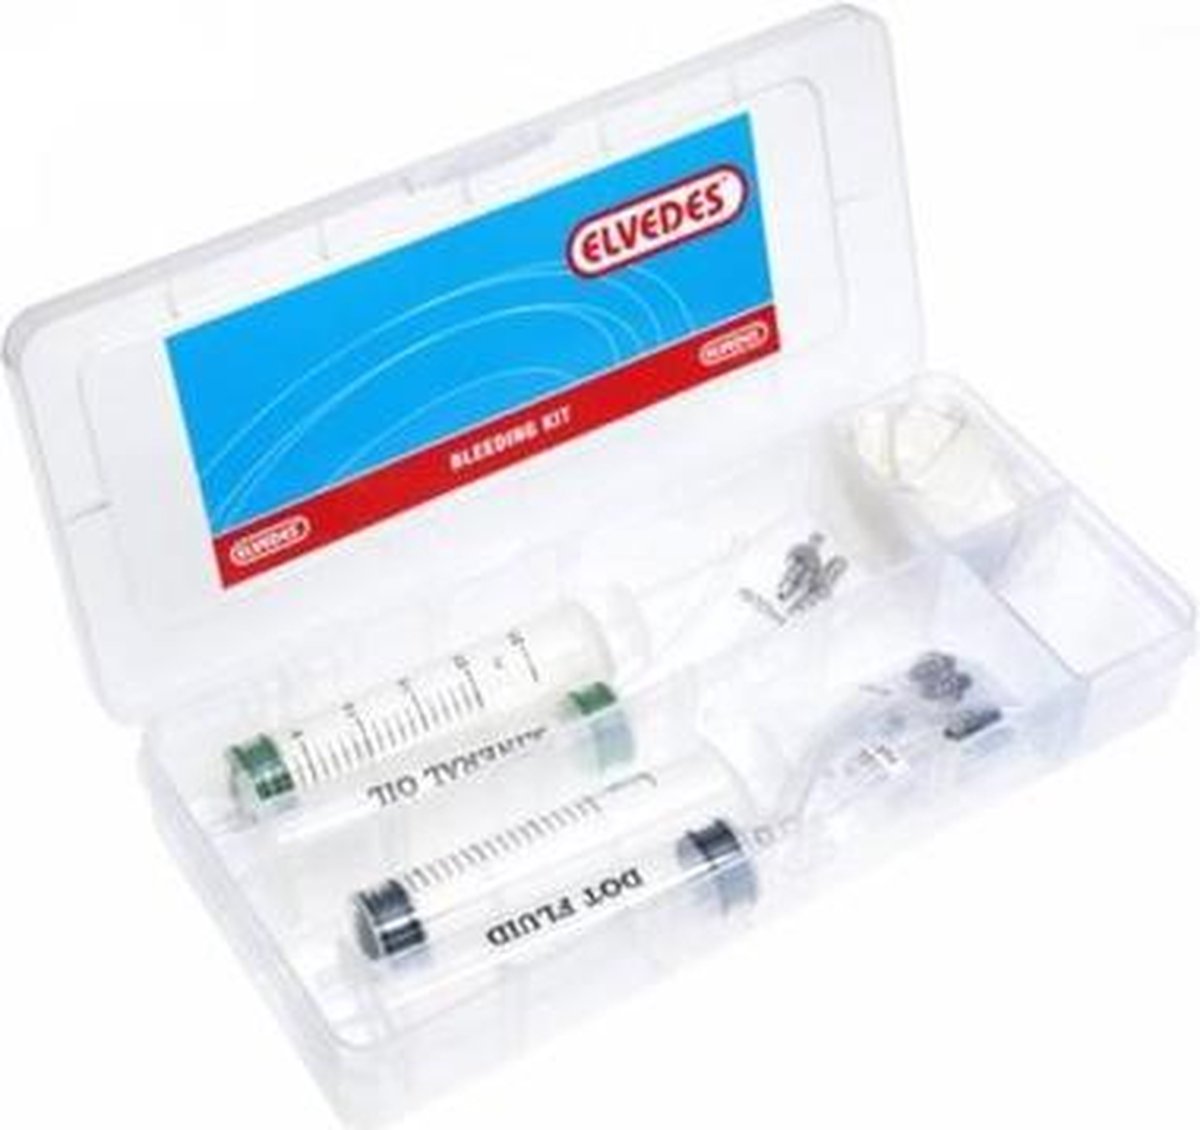 Elvedes ontluchtings-kit minaraal + dot bleeding kit